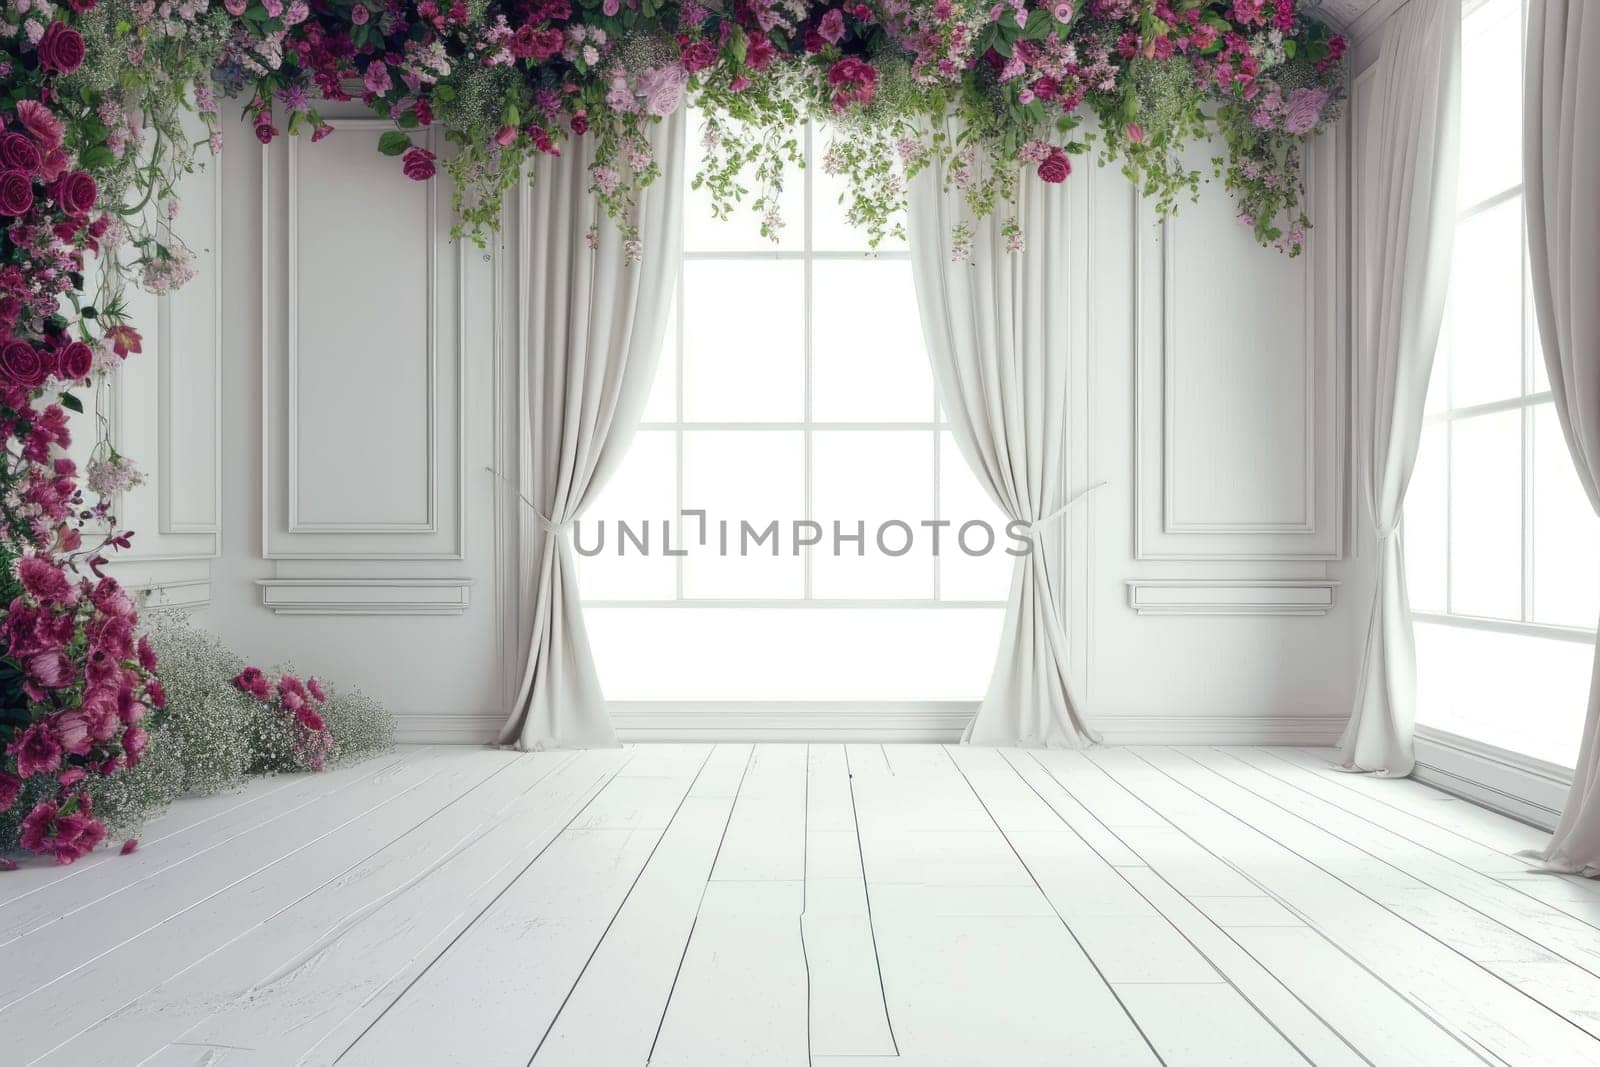 Wedding backdrop aesthetic flower wreath decoration indoor white background. Generative AI.